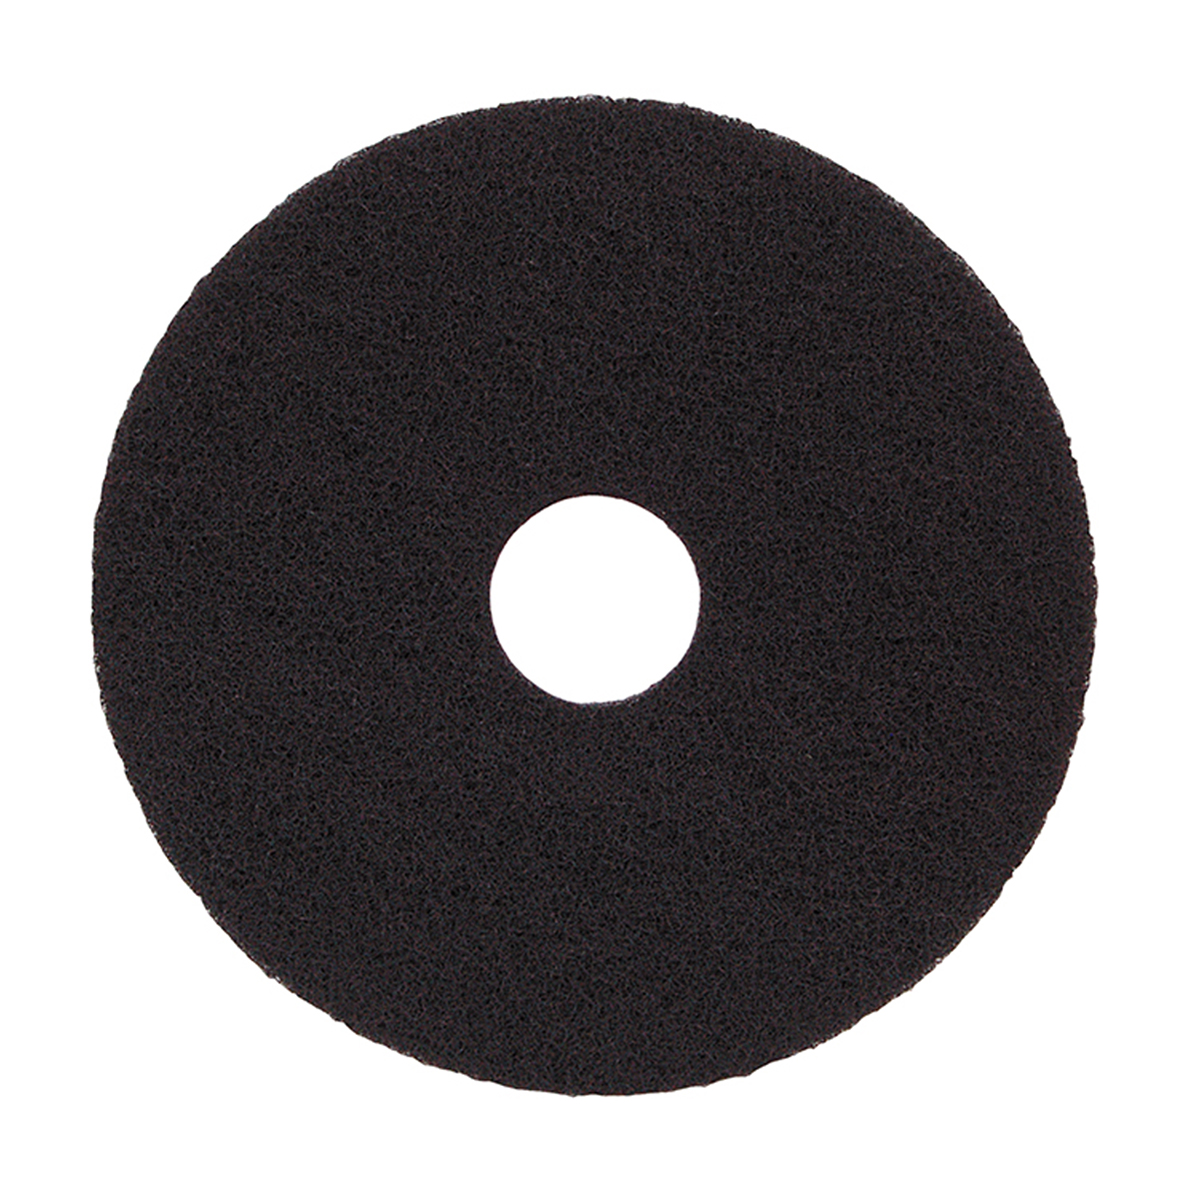 Standard speed floor pads 18 inch - black - box of 5